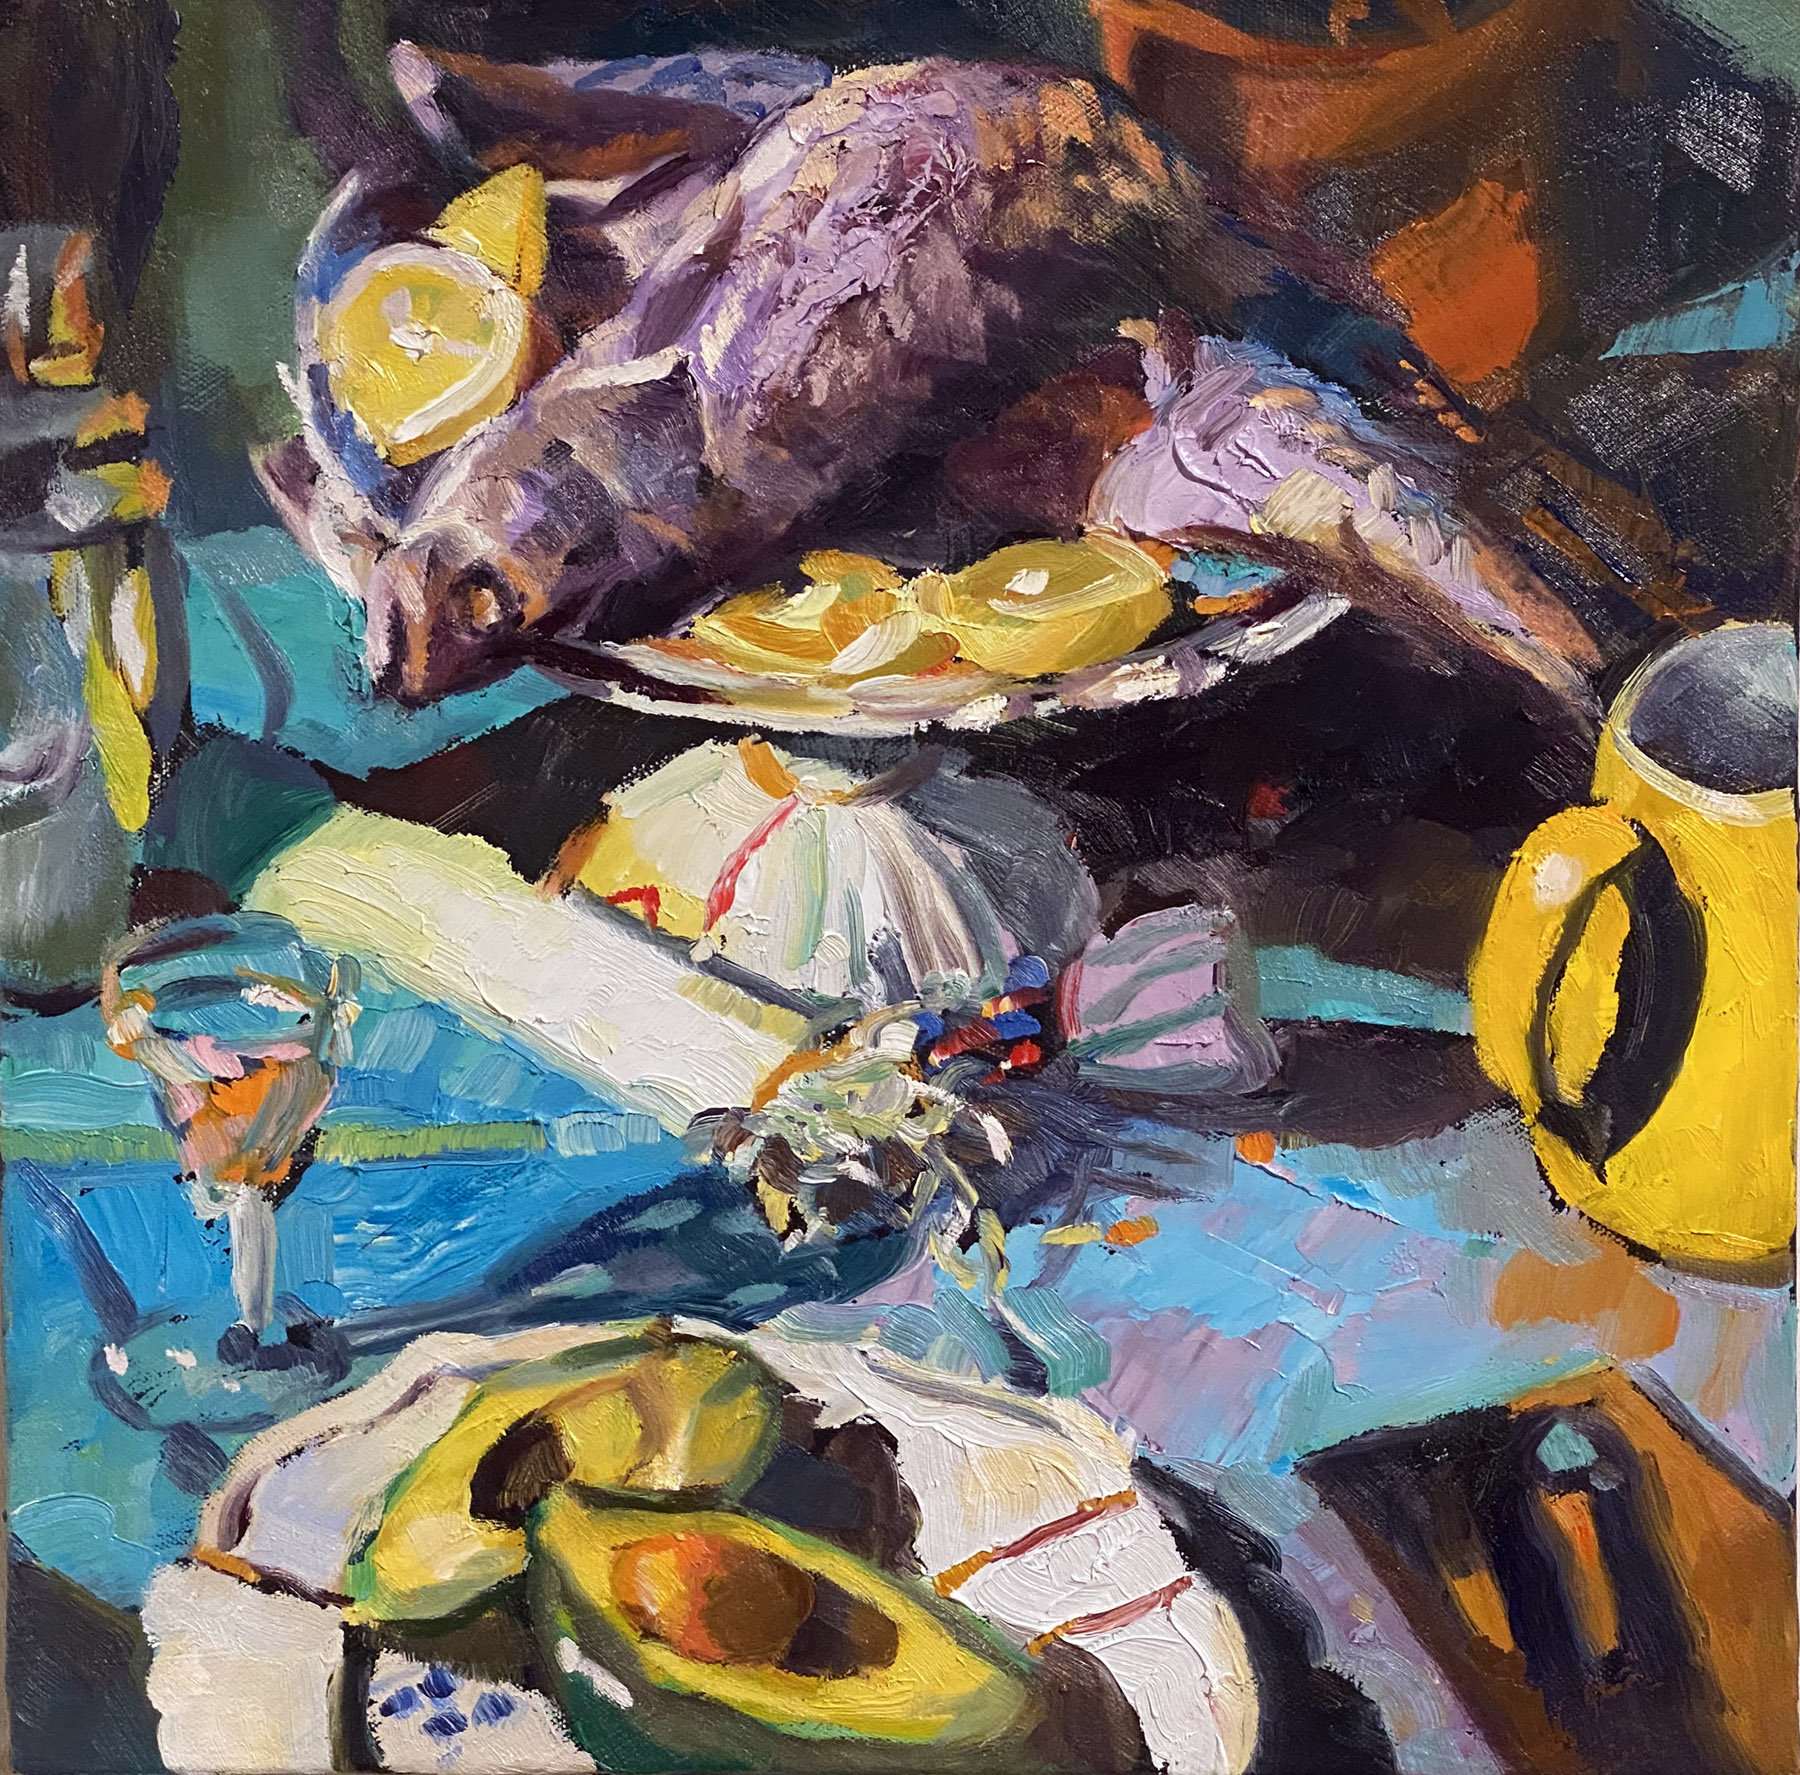 Rosemary Valadon 'Summer Days (Fish) 2' oil on canvas 40 x 40cm